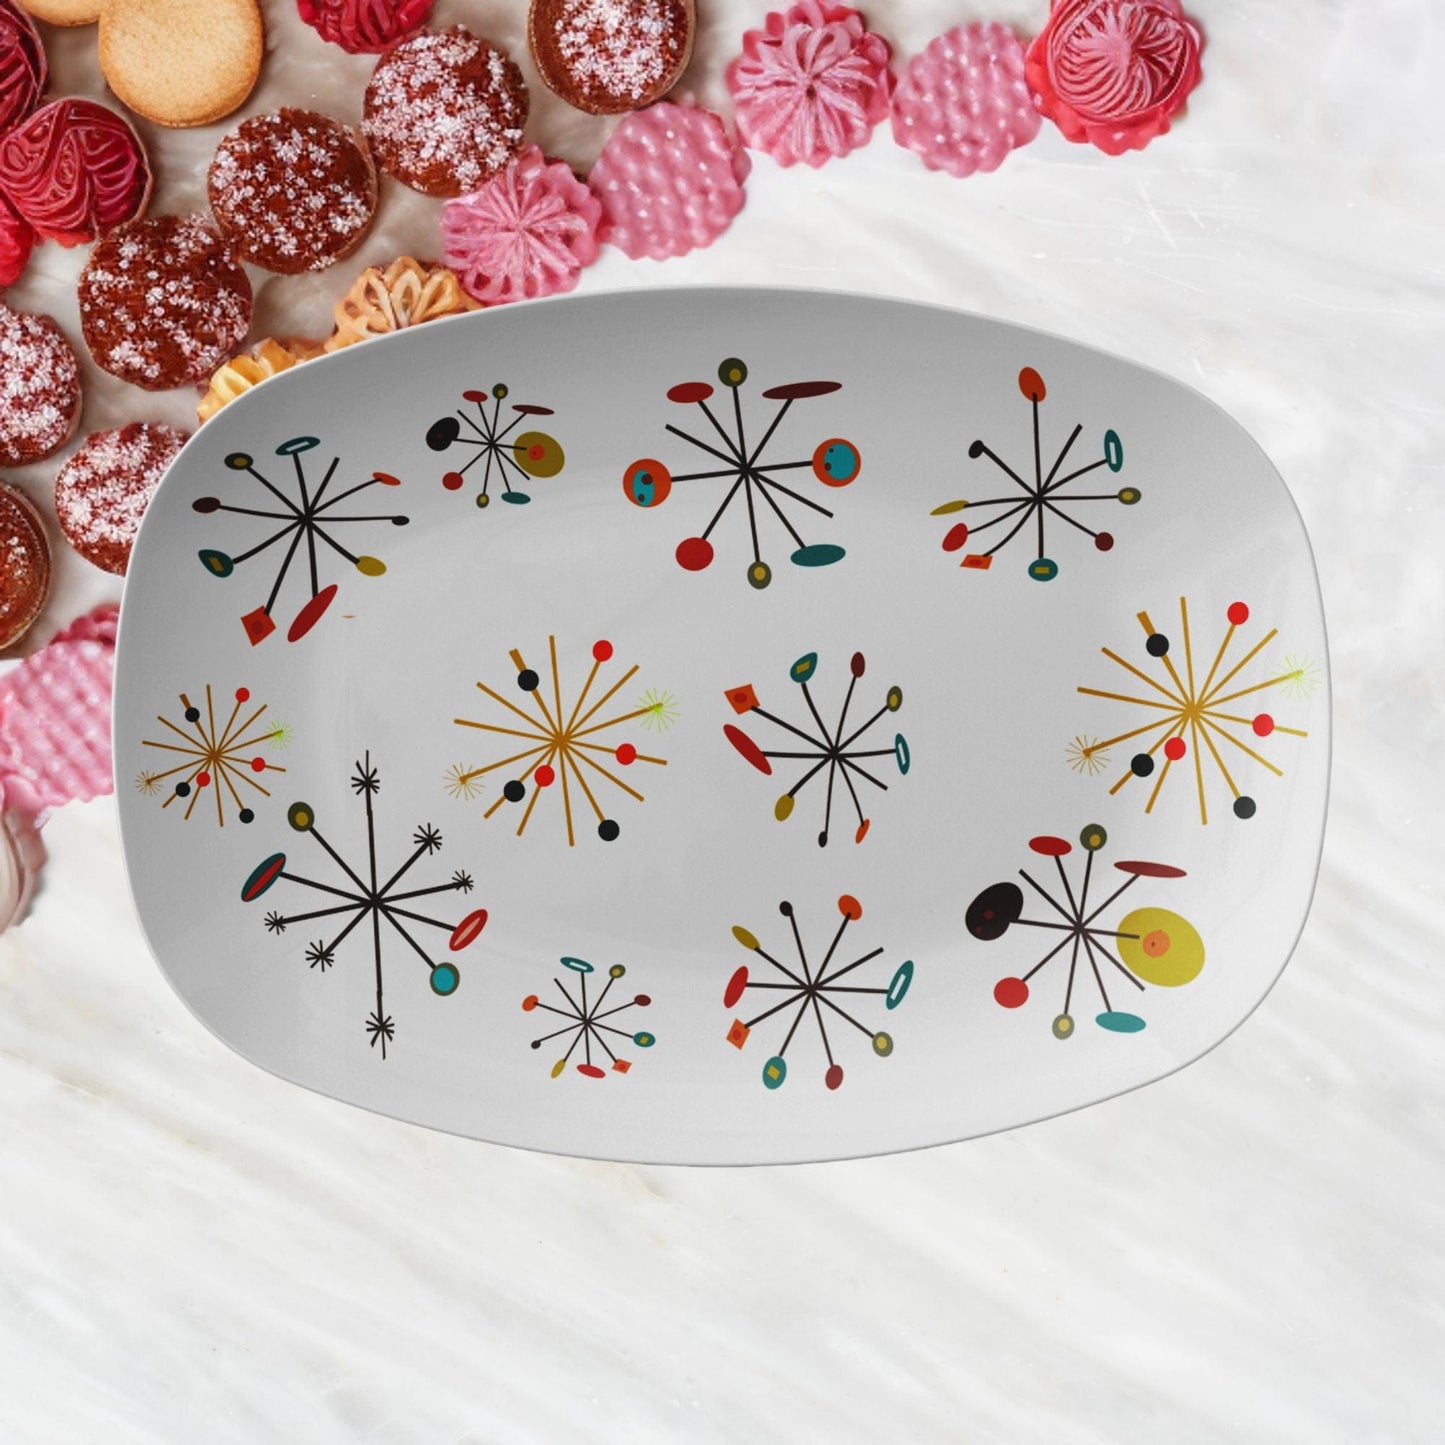 Kate McEnroe New York Mid Century Modern Atomic Starburst Platter, 1950s Inspired Design, Retro Vintage Serving Dish, Collectible Home Decor Kitchenware 9727